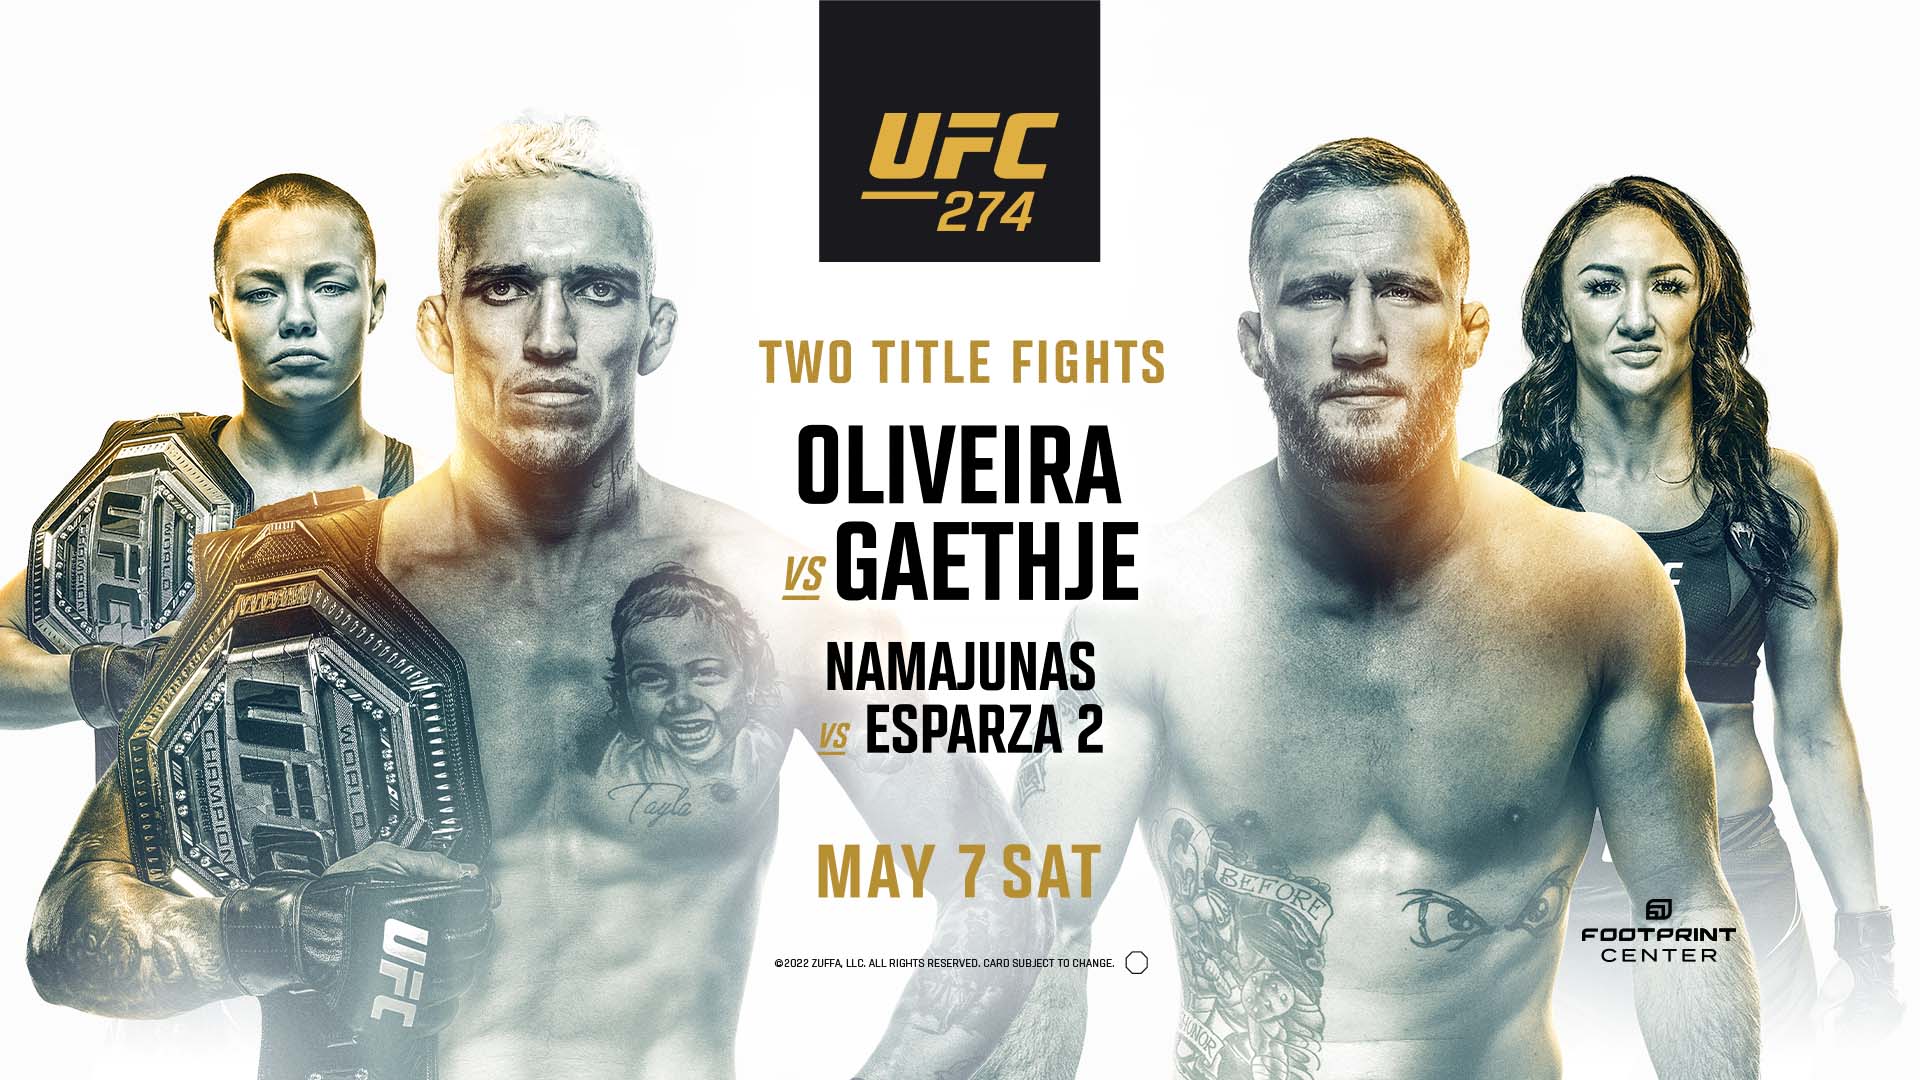 UFC 274: OLIVEIRA VS GAETHJE